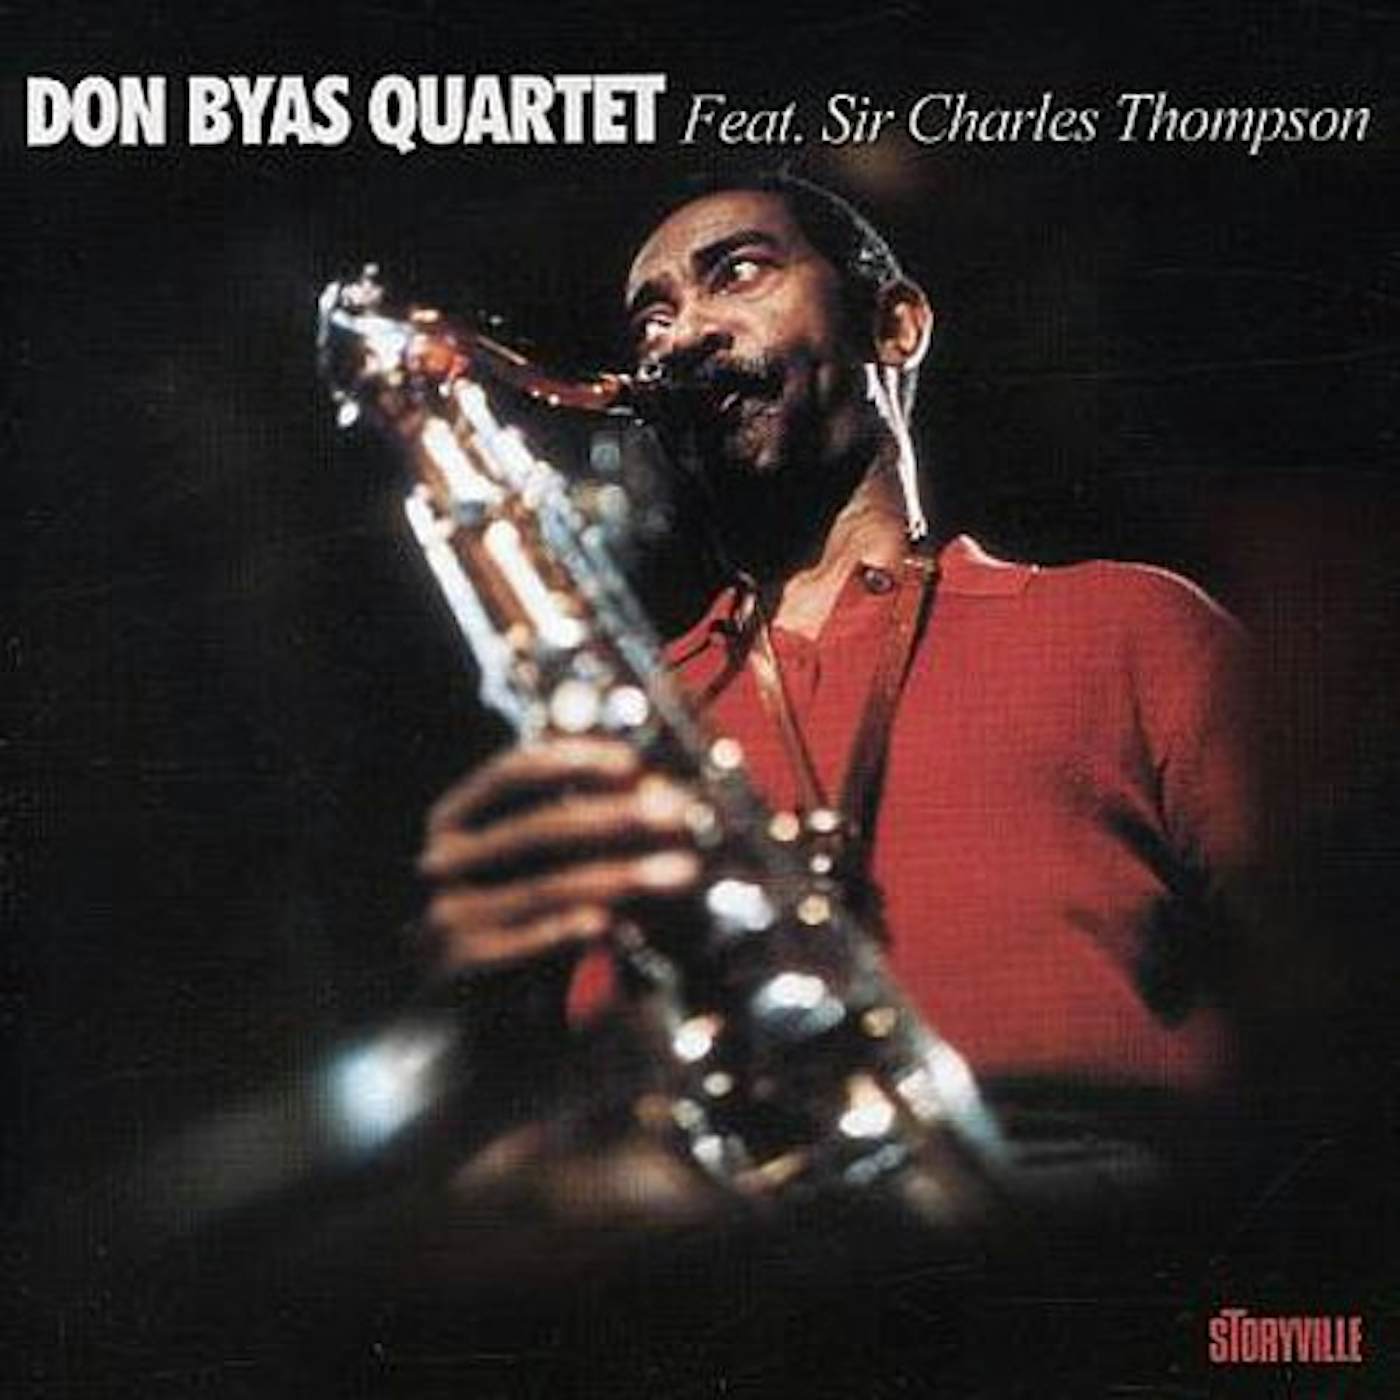 Don Byas FEAT SIR CHARLES THOMPSON CD